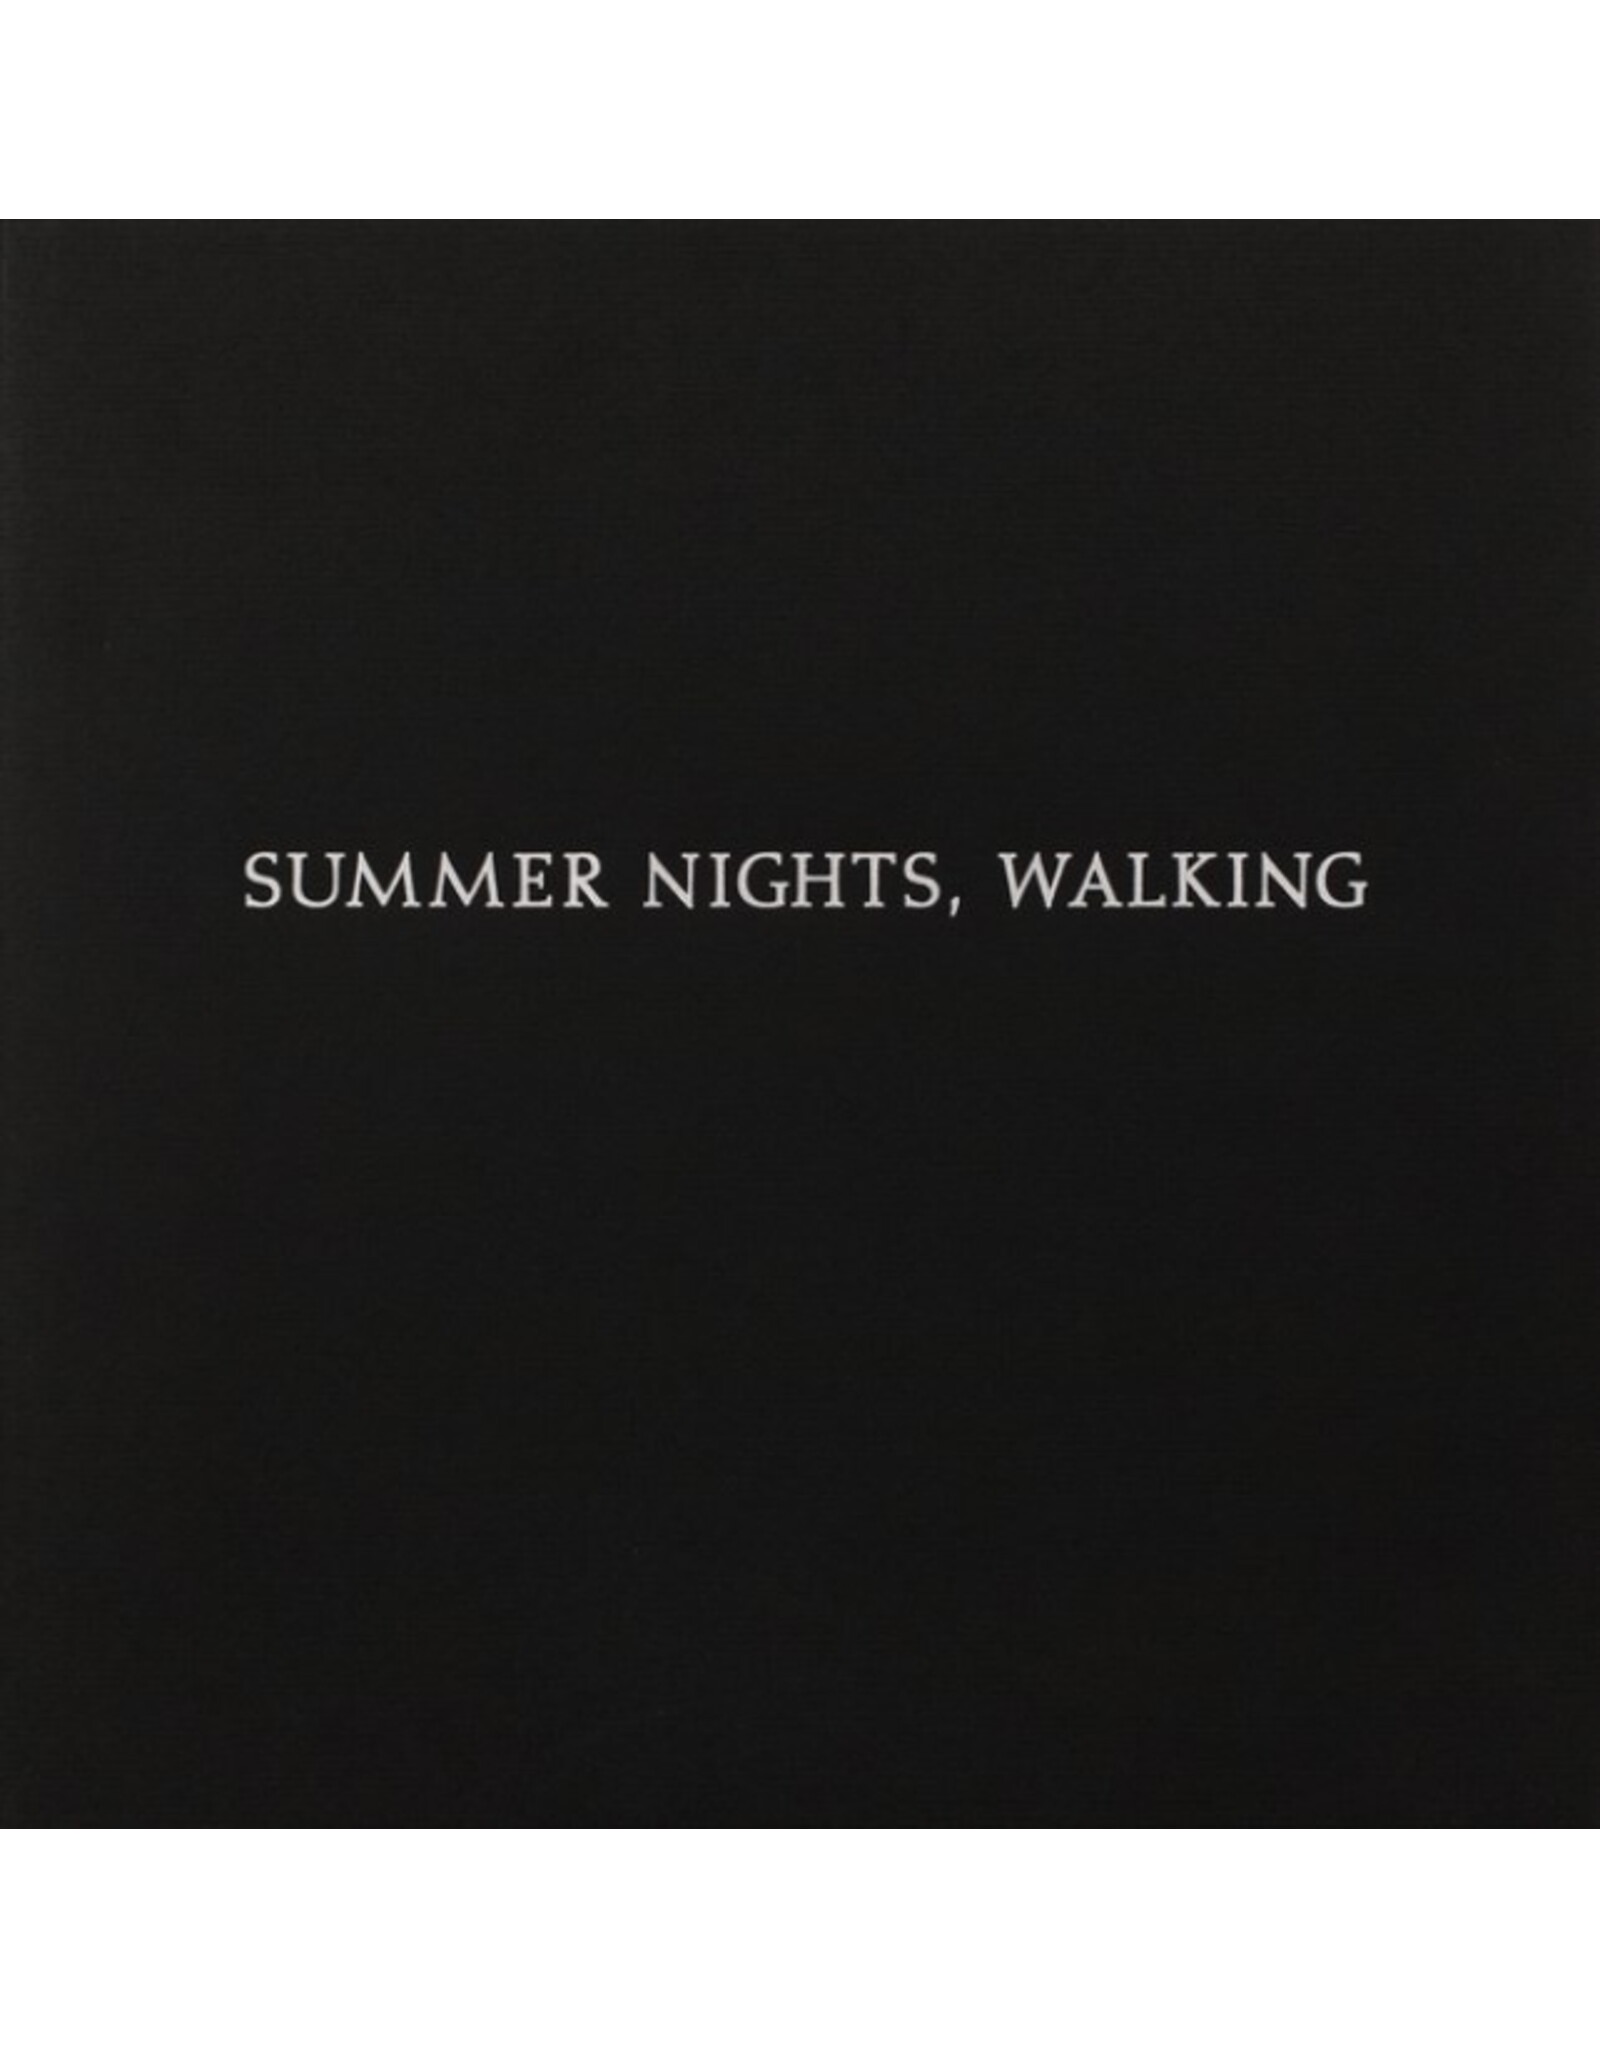 Robert Adams: Summer Nights, Walking